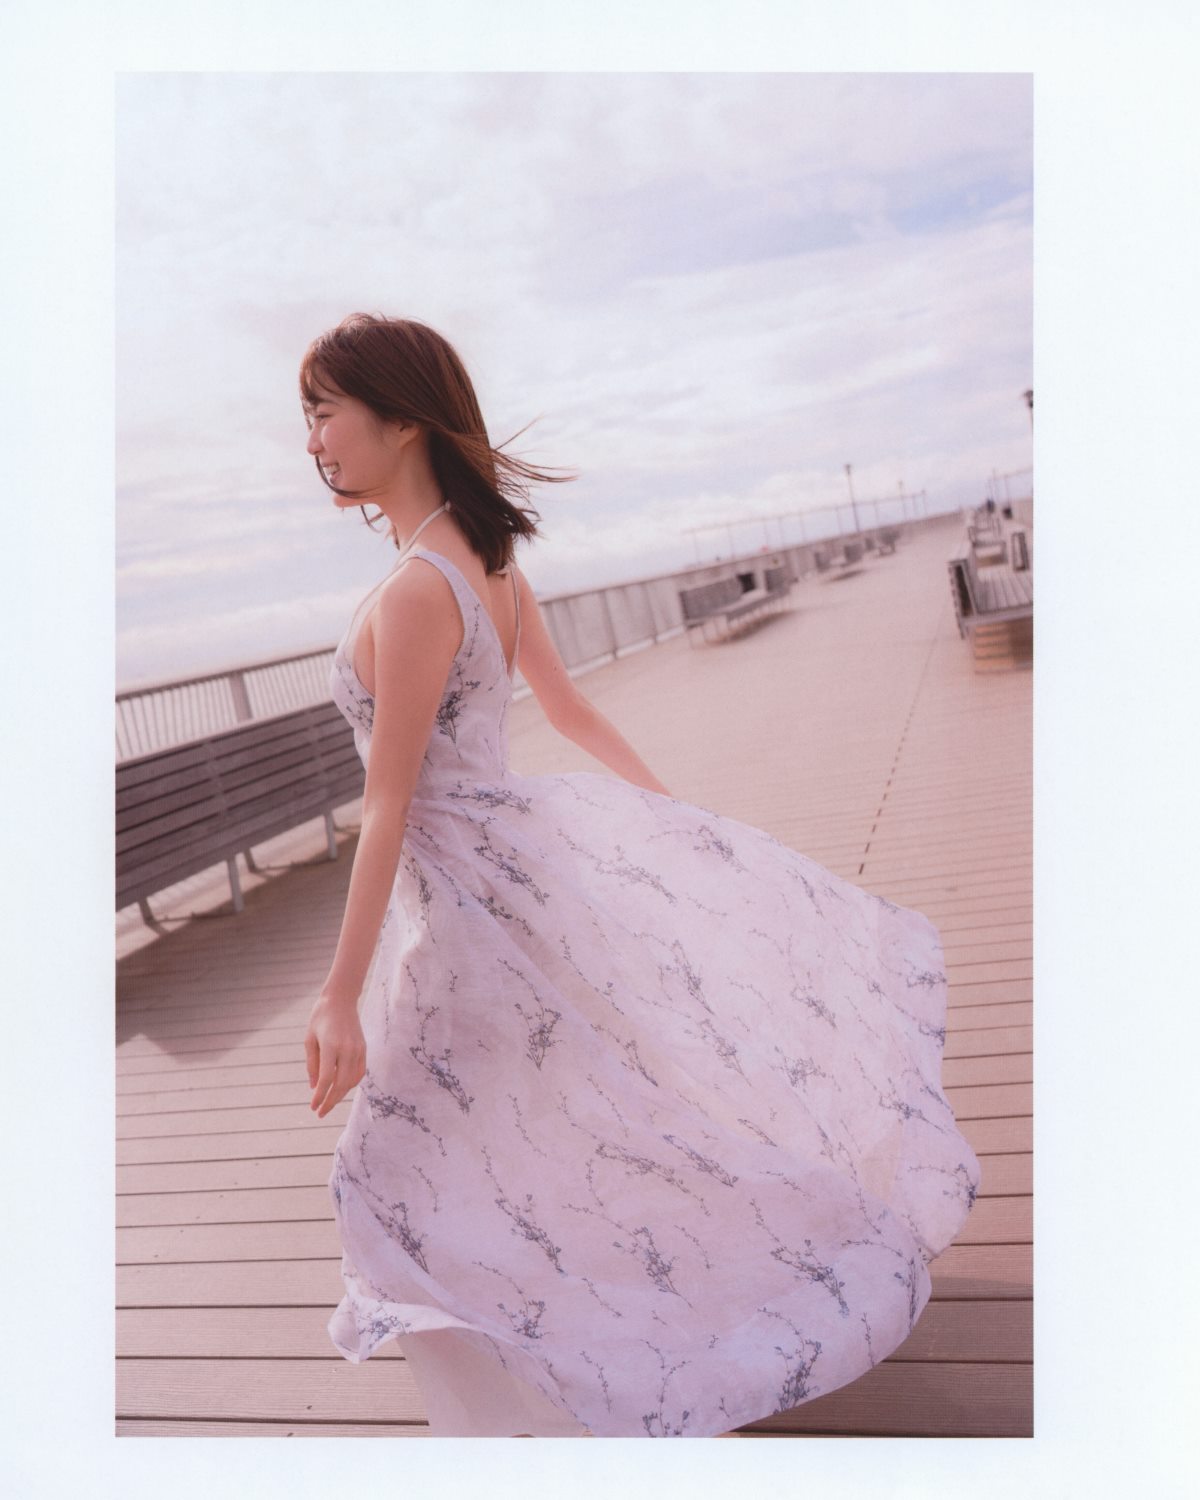 Photobook Ikuta Erika 2nd Photobook Intermission Nogizaka46 Bonus Postcard 生田絵梨花写真集 インターミッション 0030 4037587252.jpg